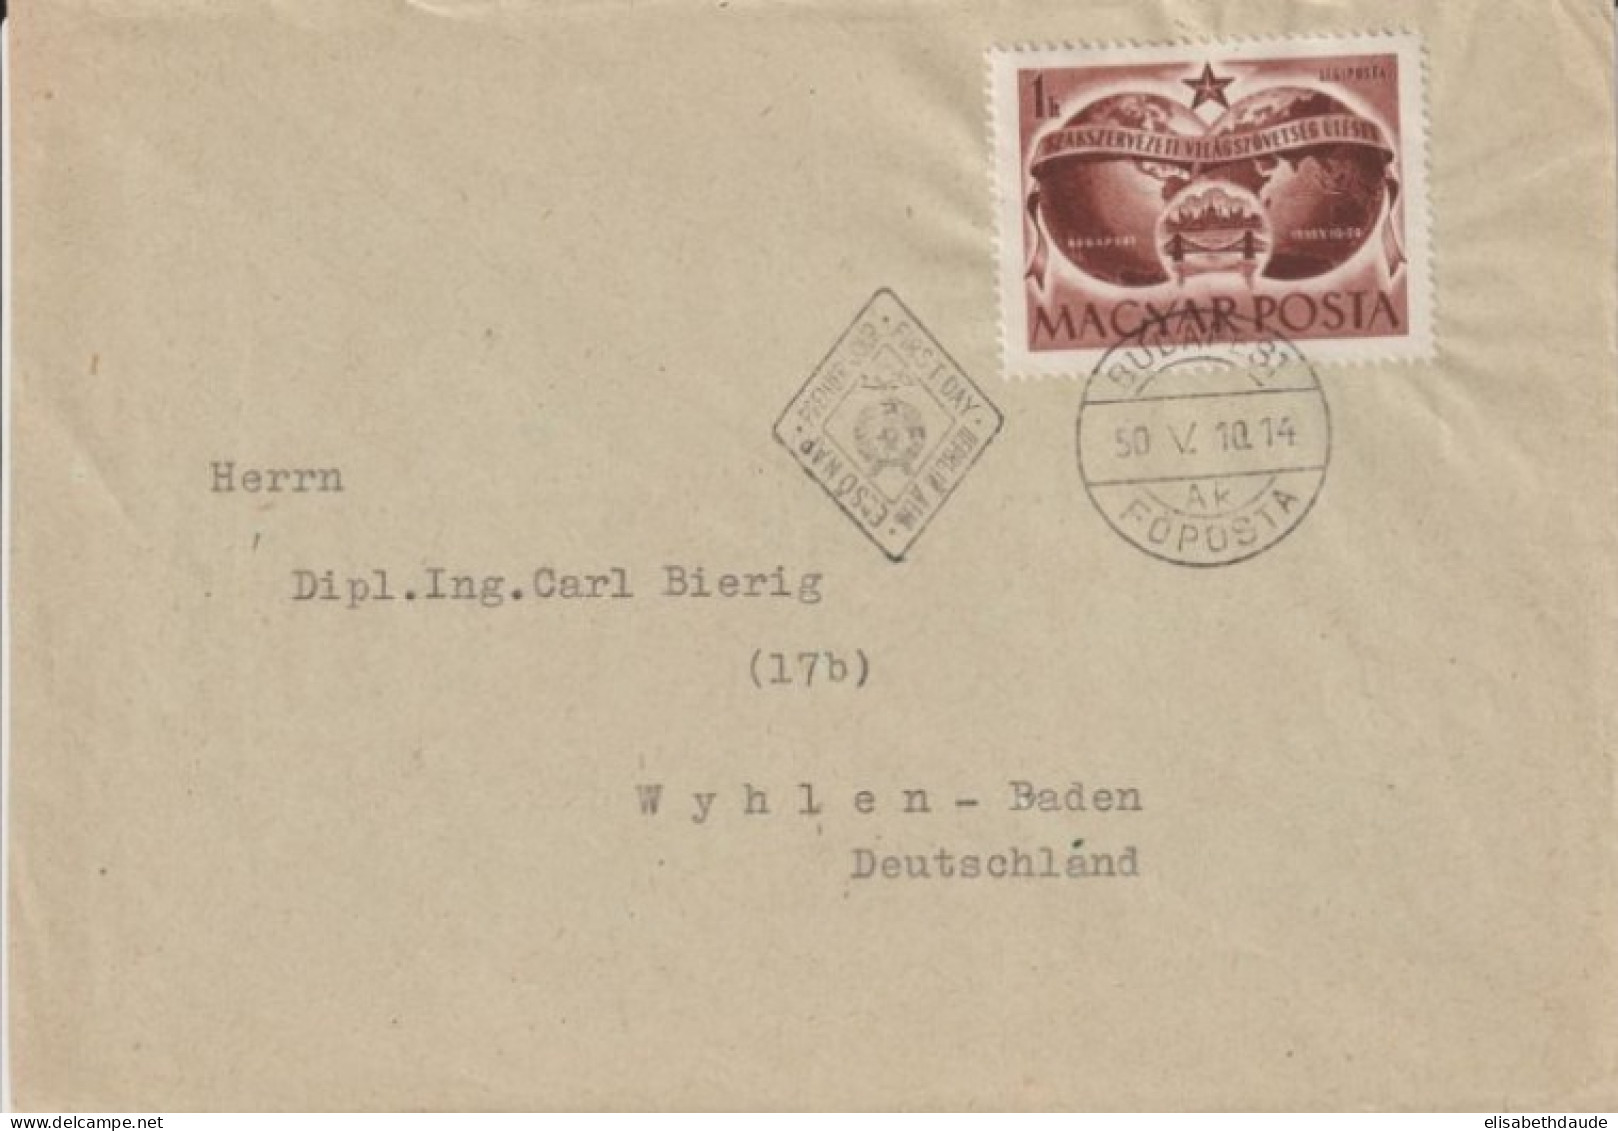 HONGRIE - 1950 - ENVELOPPE FDC De BUDAPEST => WYHLEN - BADEN (GERMANY) - FDC